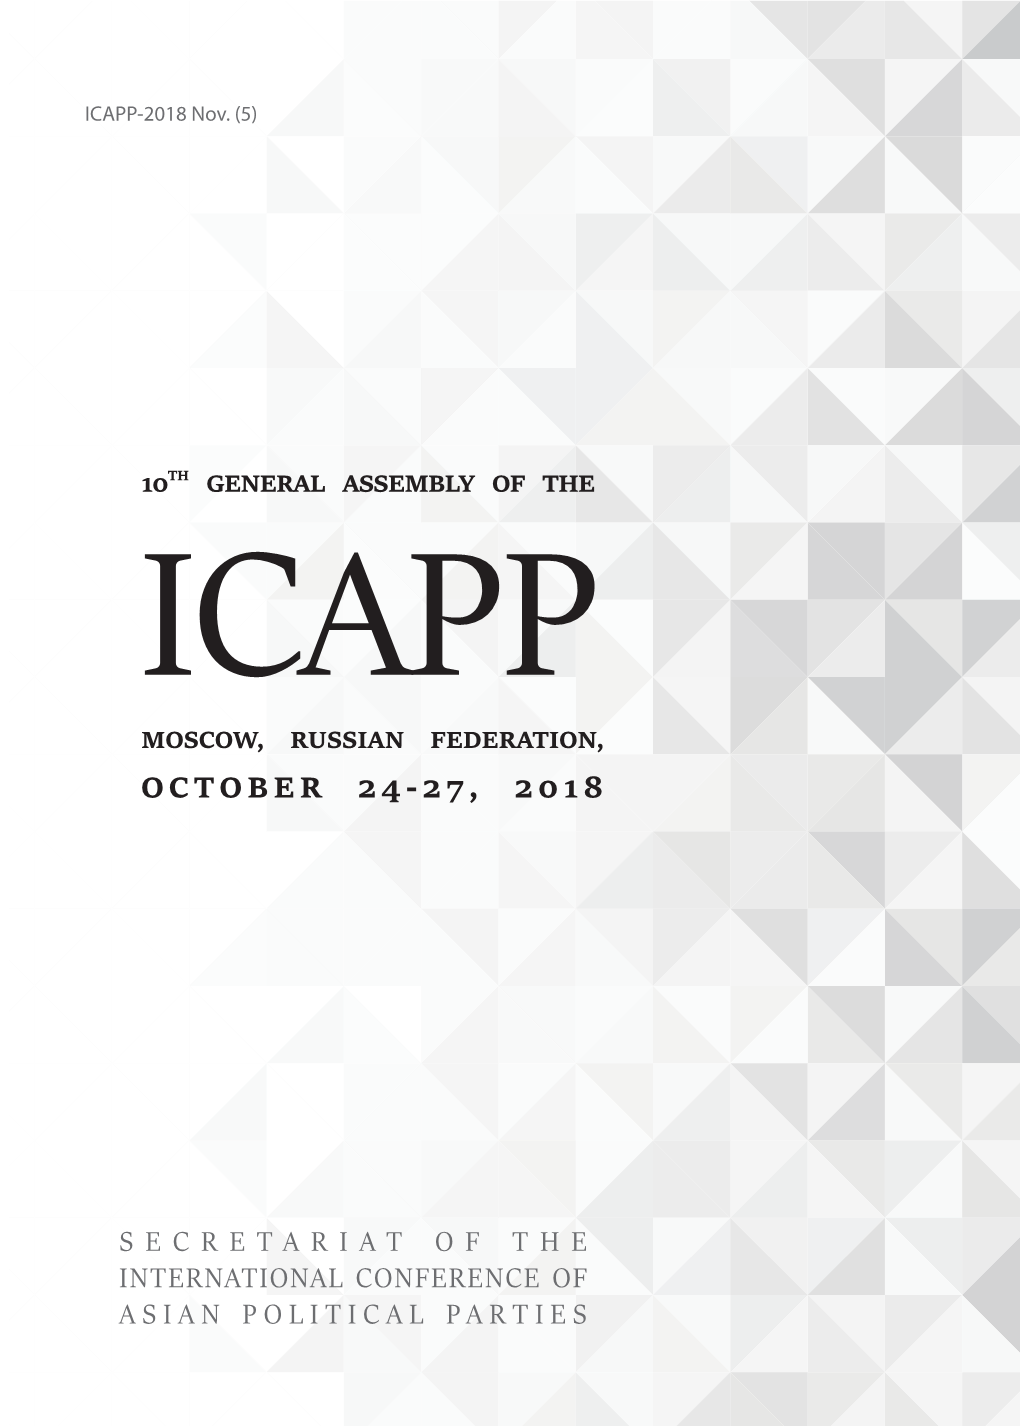 ICAPP-2018 Nov